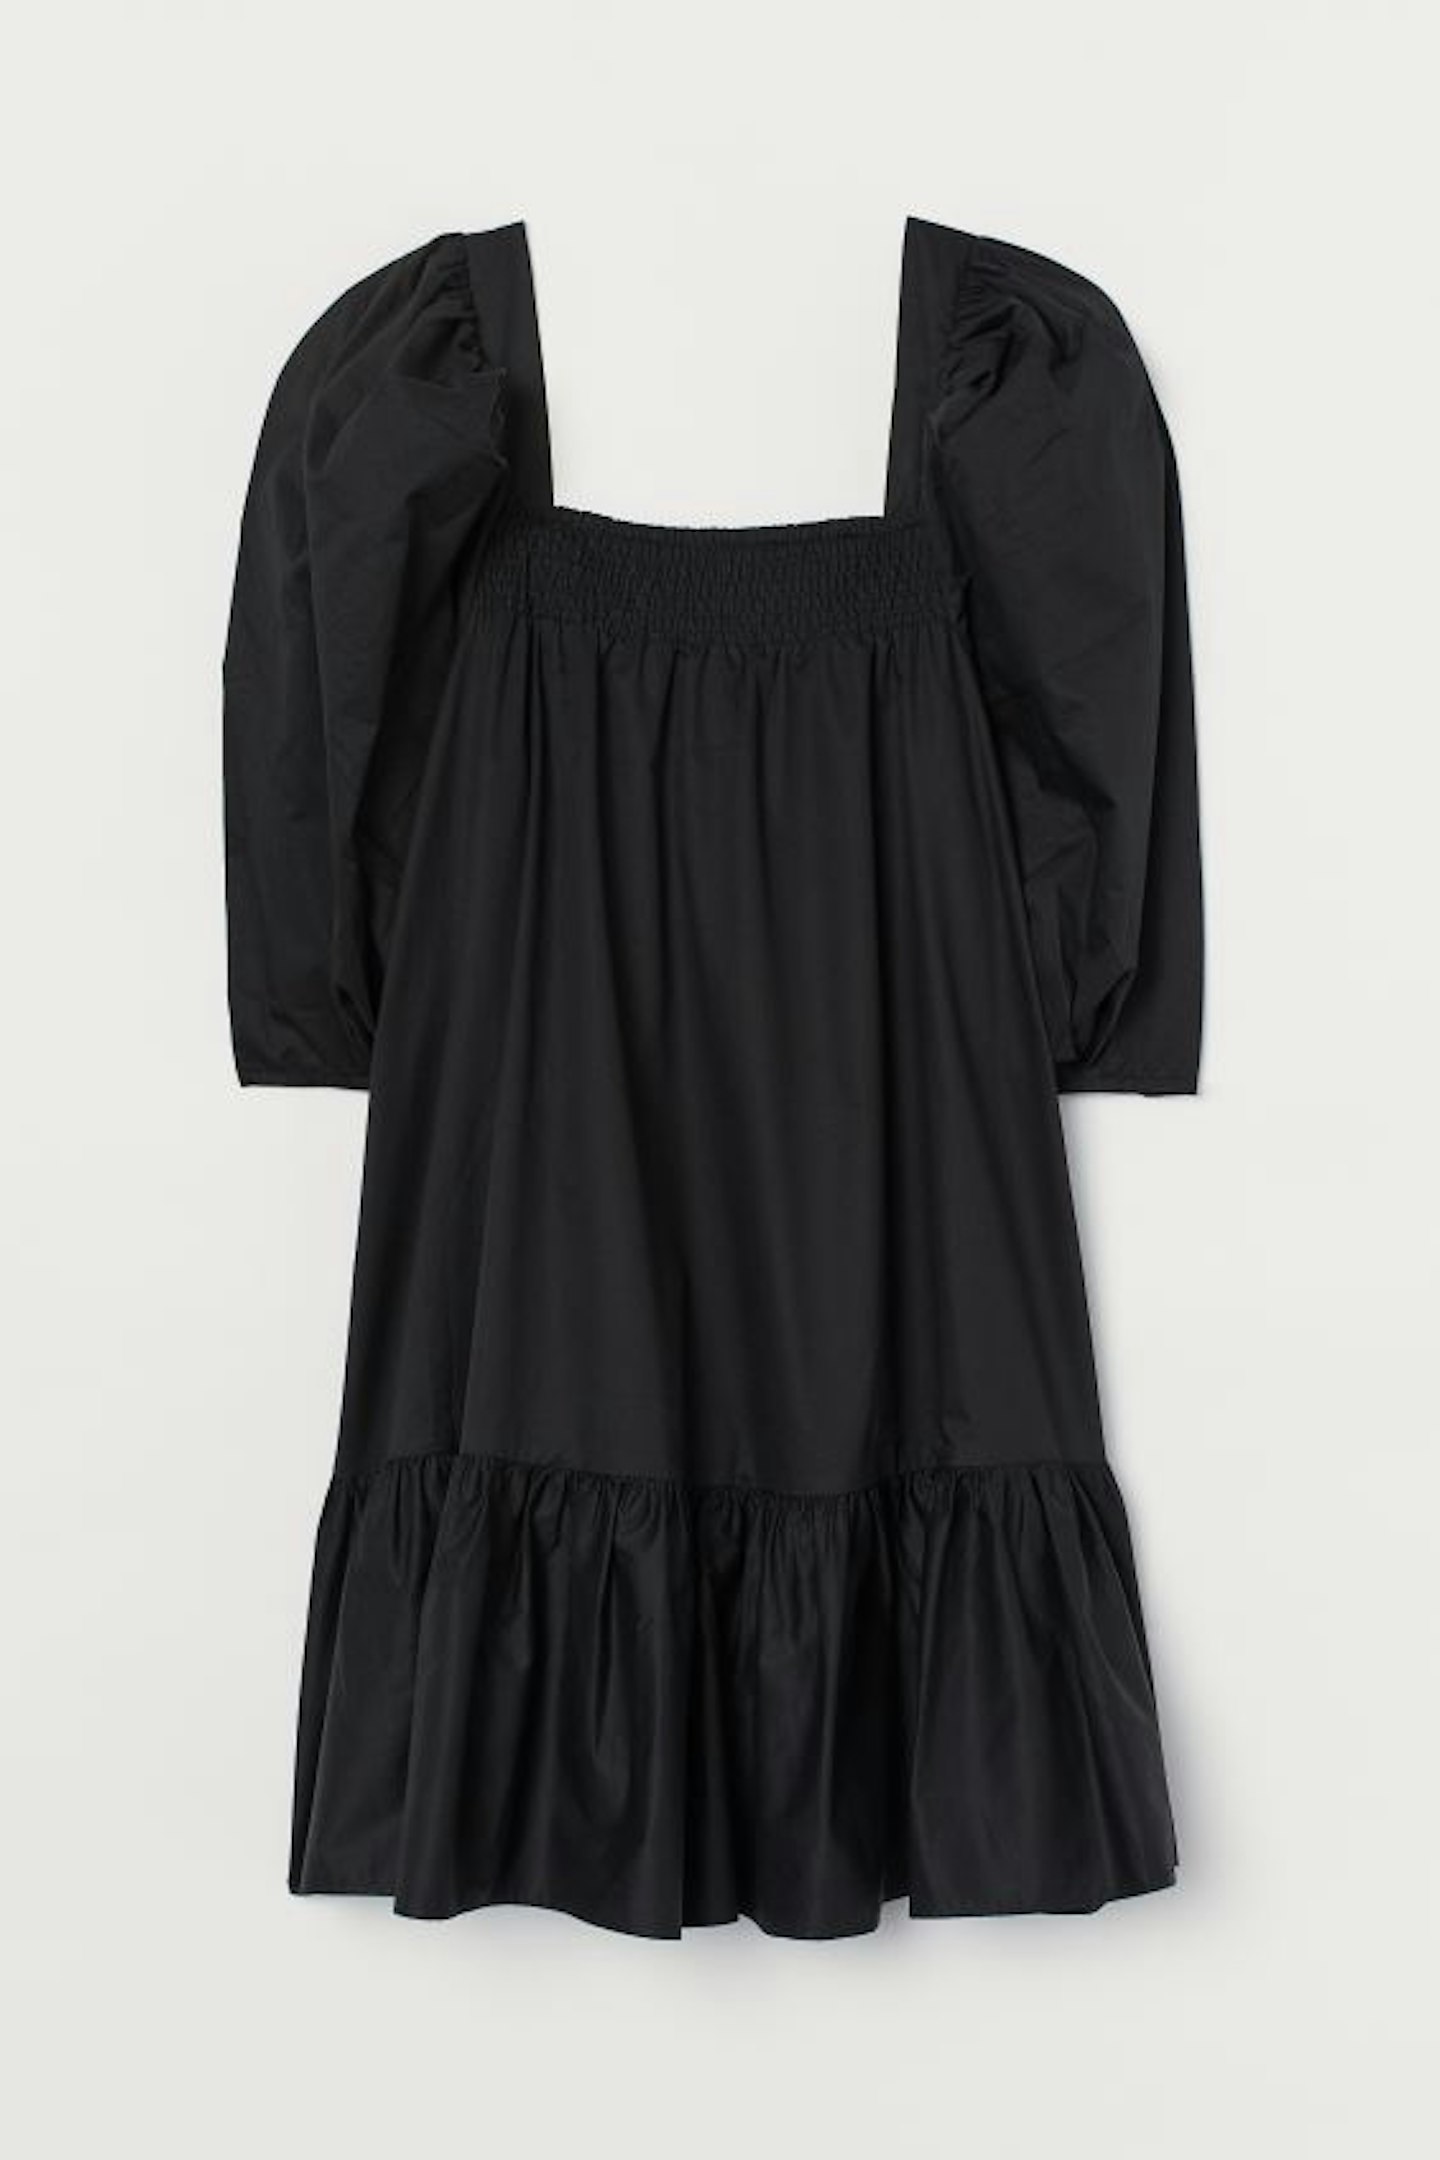 Puff Sleeve Black Dress, £14.99